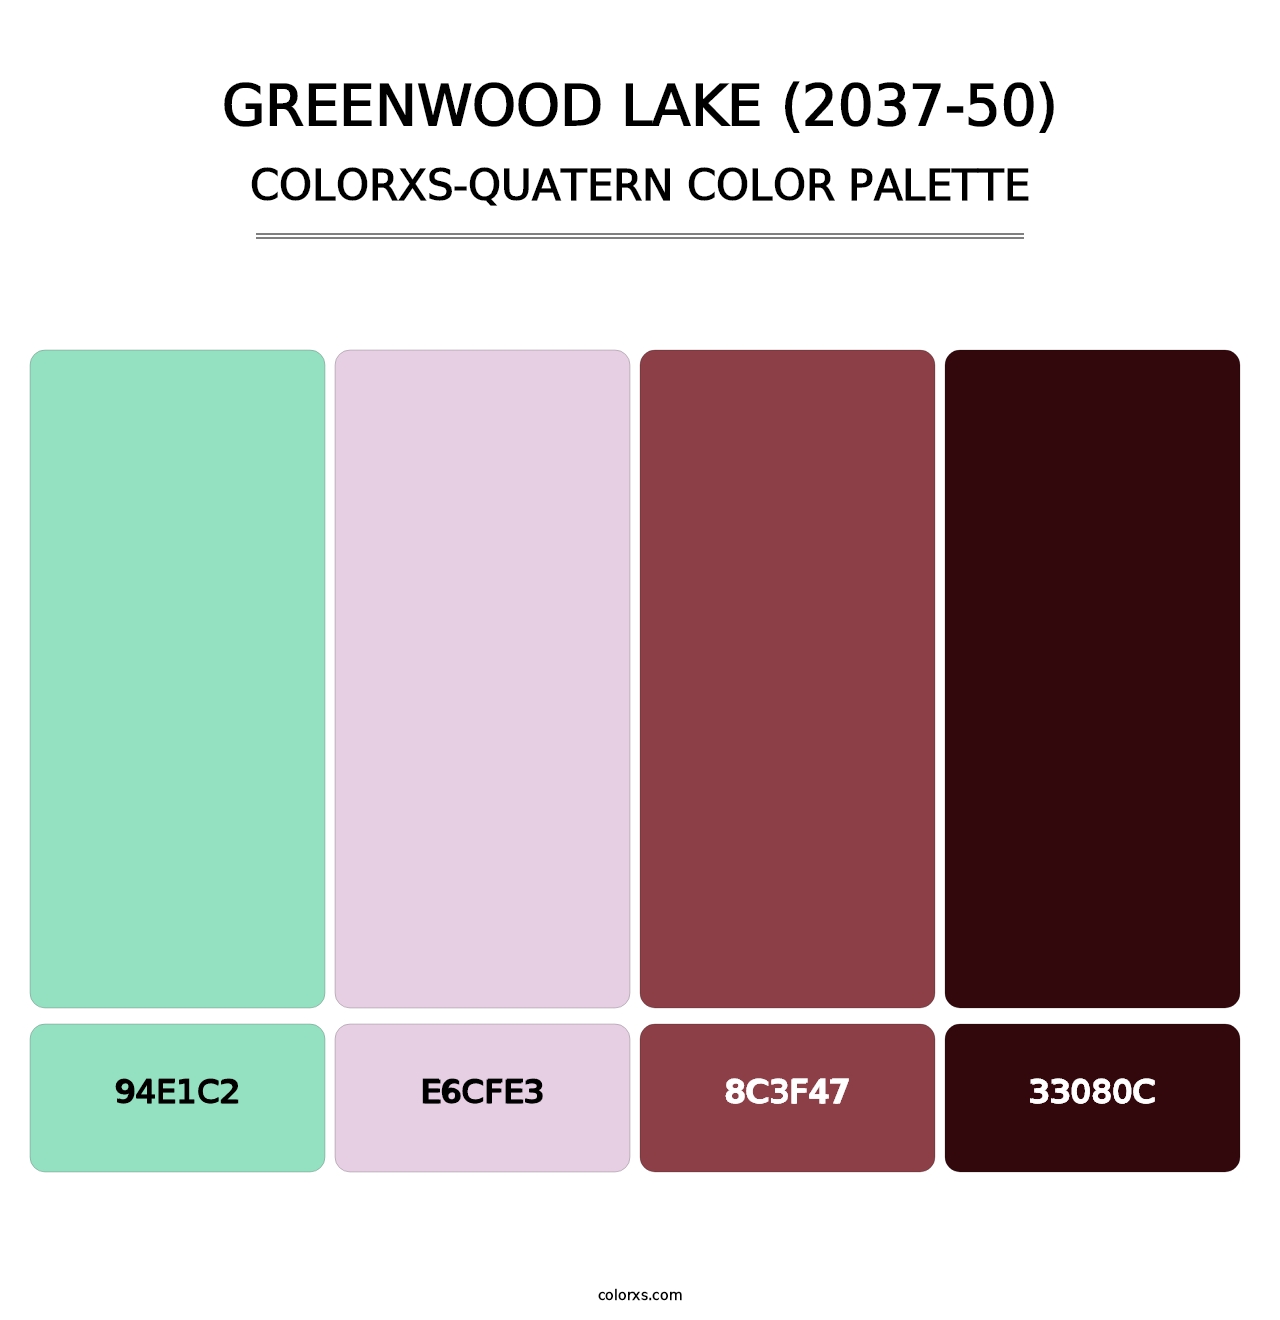 Greenwood Lake (2037-50) - Colorxs Quatern Palette